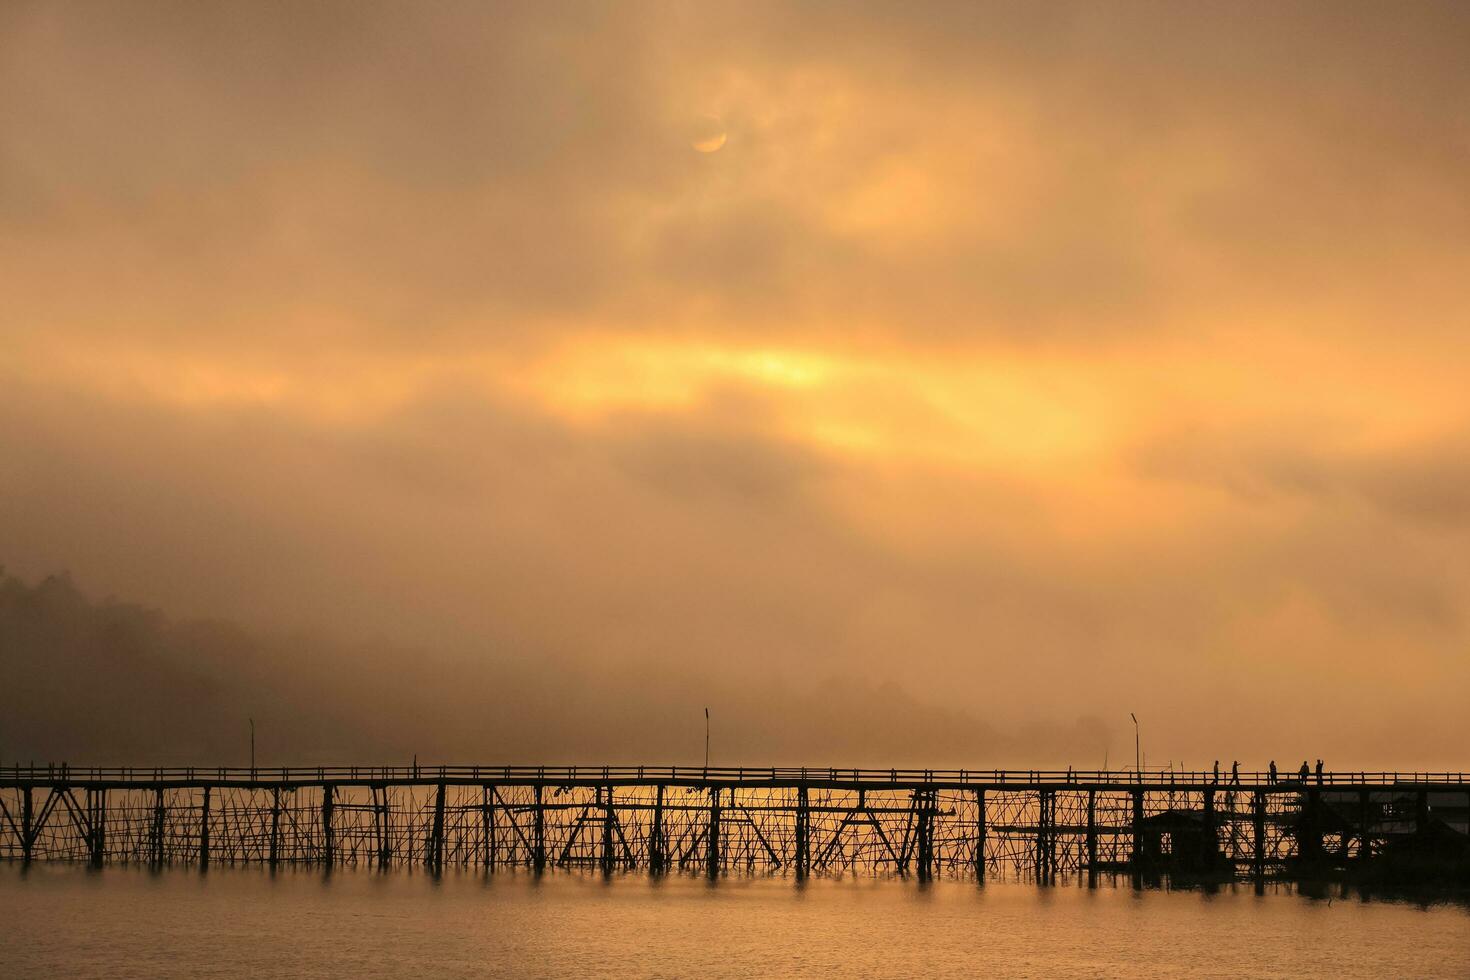 bridge across river at sunrise reflection on water photo